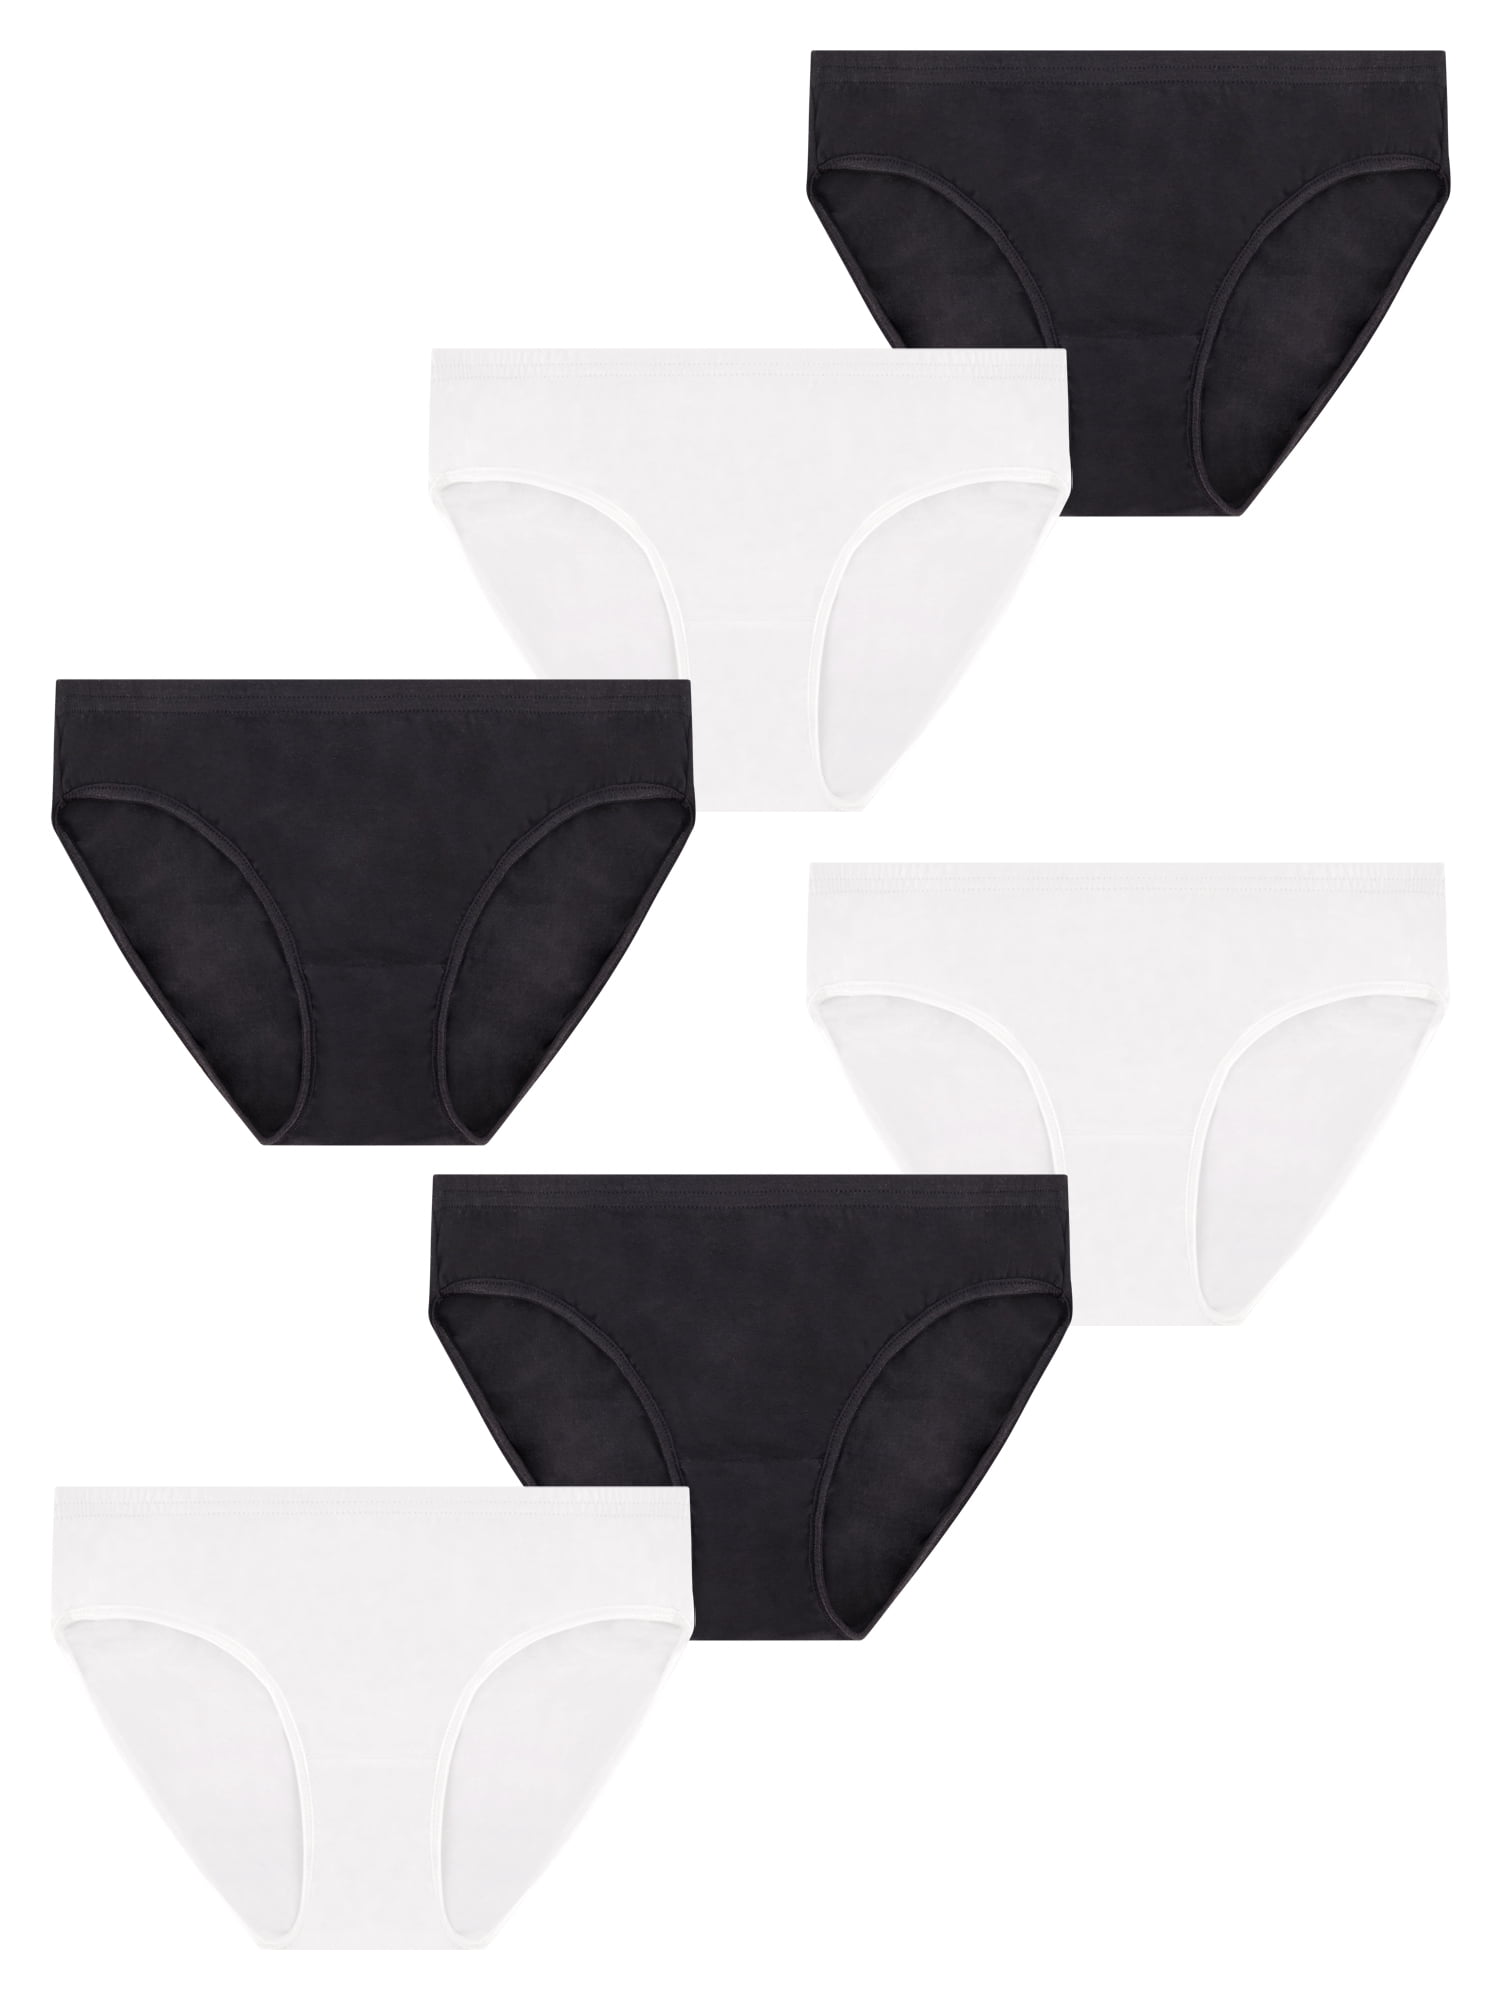 Best Fitting Panty Women's Cotton Stretch Bikini, 6 Pack 